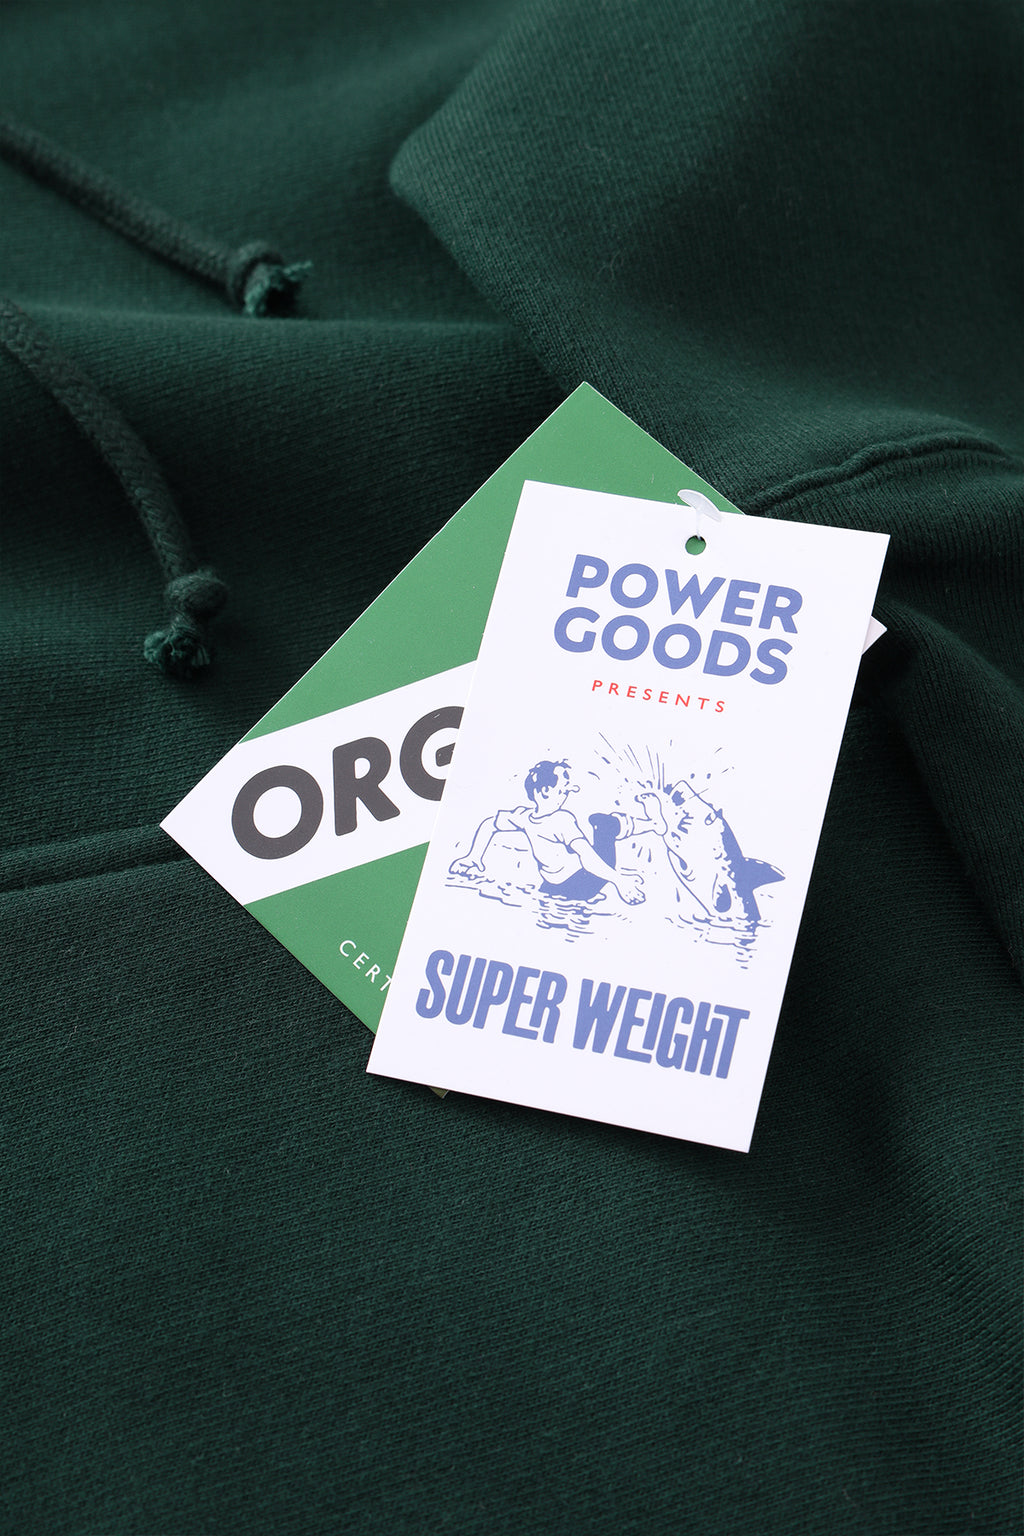 Power Goods - Super Weight Hoodie - Forest Green